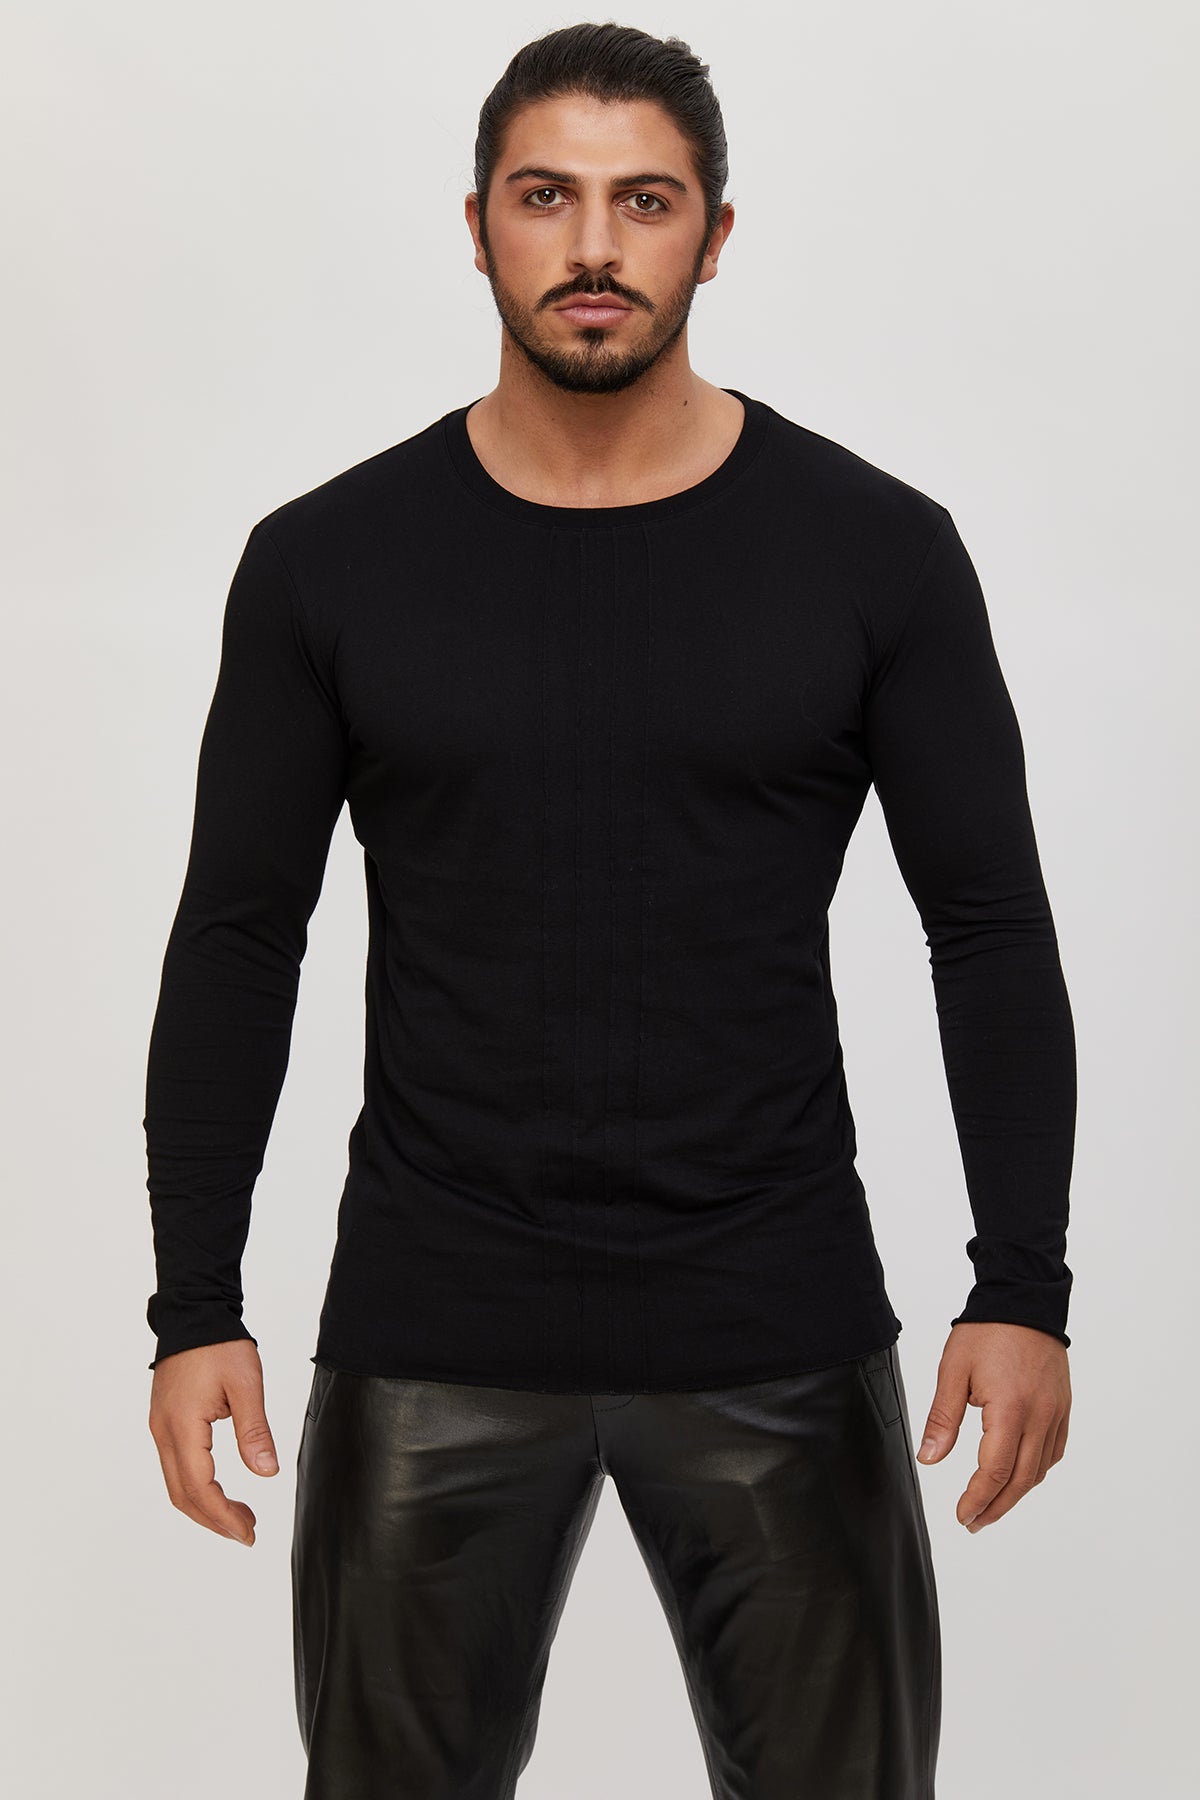 Men's long t-shirts,Tops-Tees. 100 % quality Turki – Suvi NYC, INC